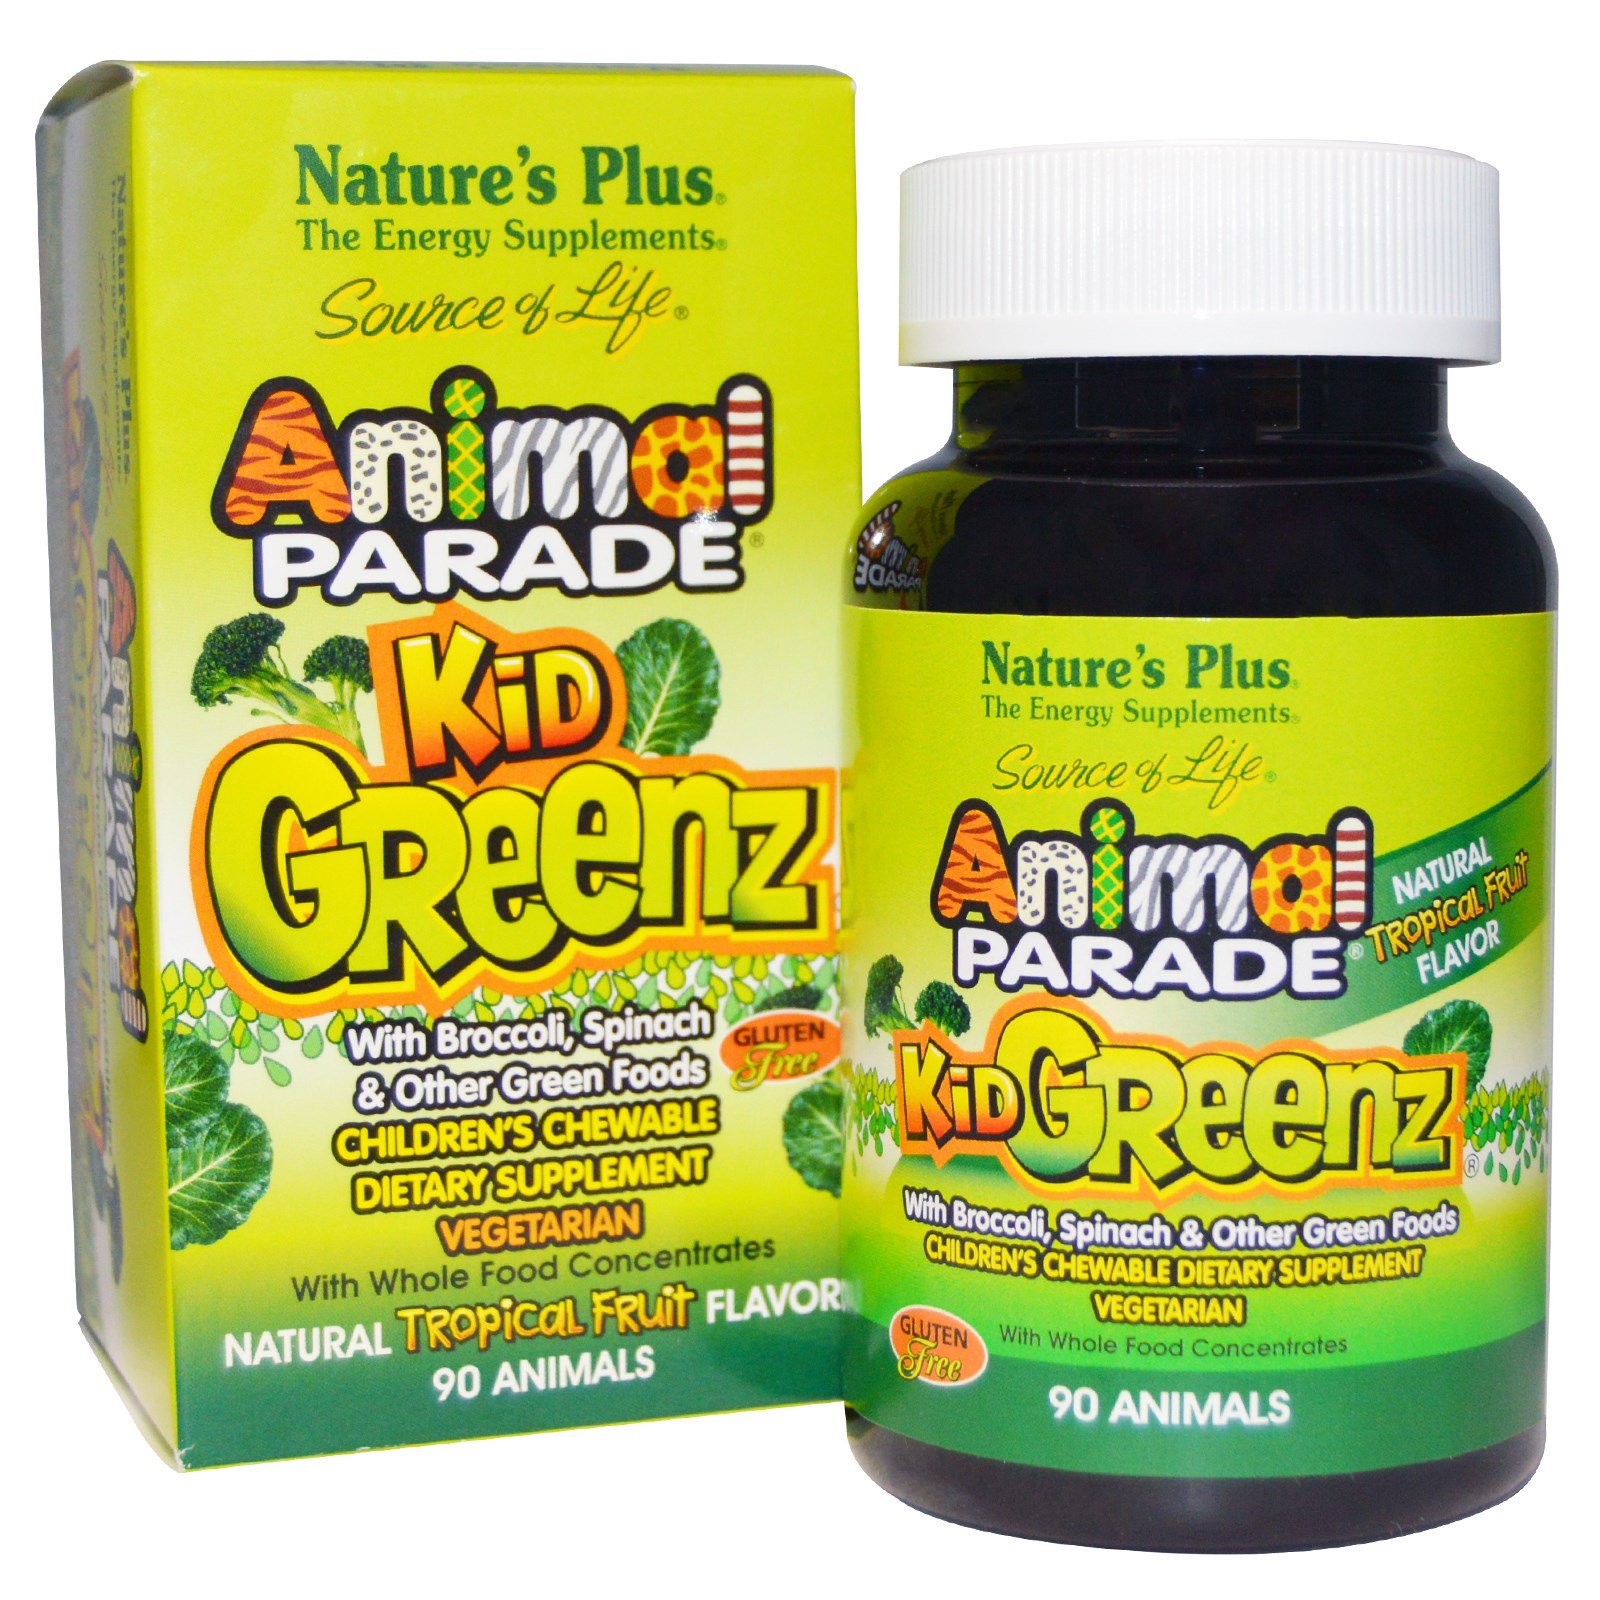 Nature's Plus Kid Greenz, Natural Tropical Fruit Flavor (90 Animals) - 